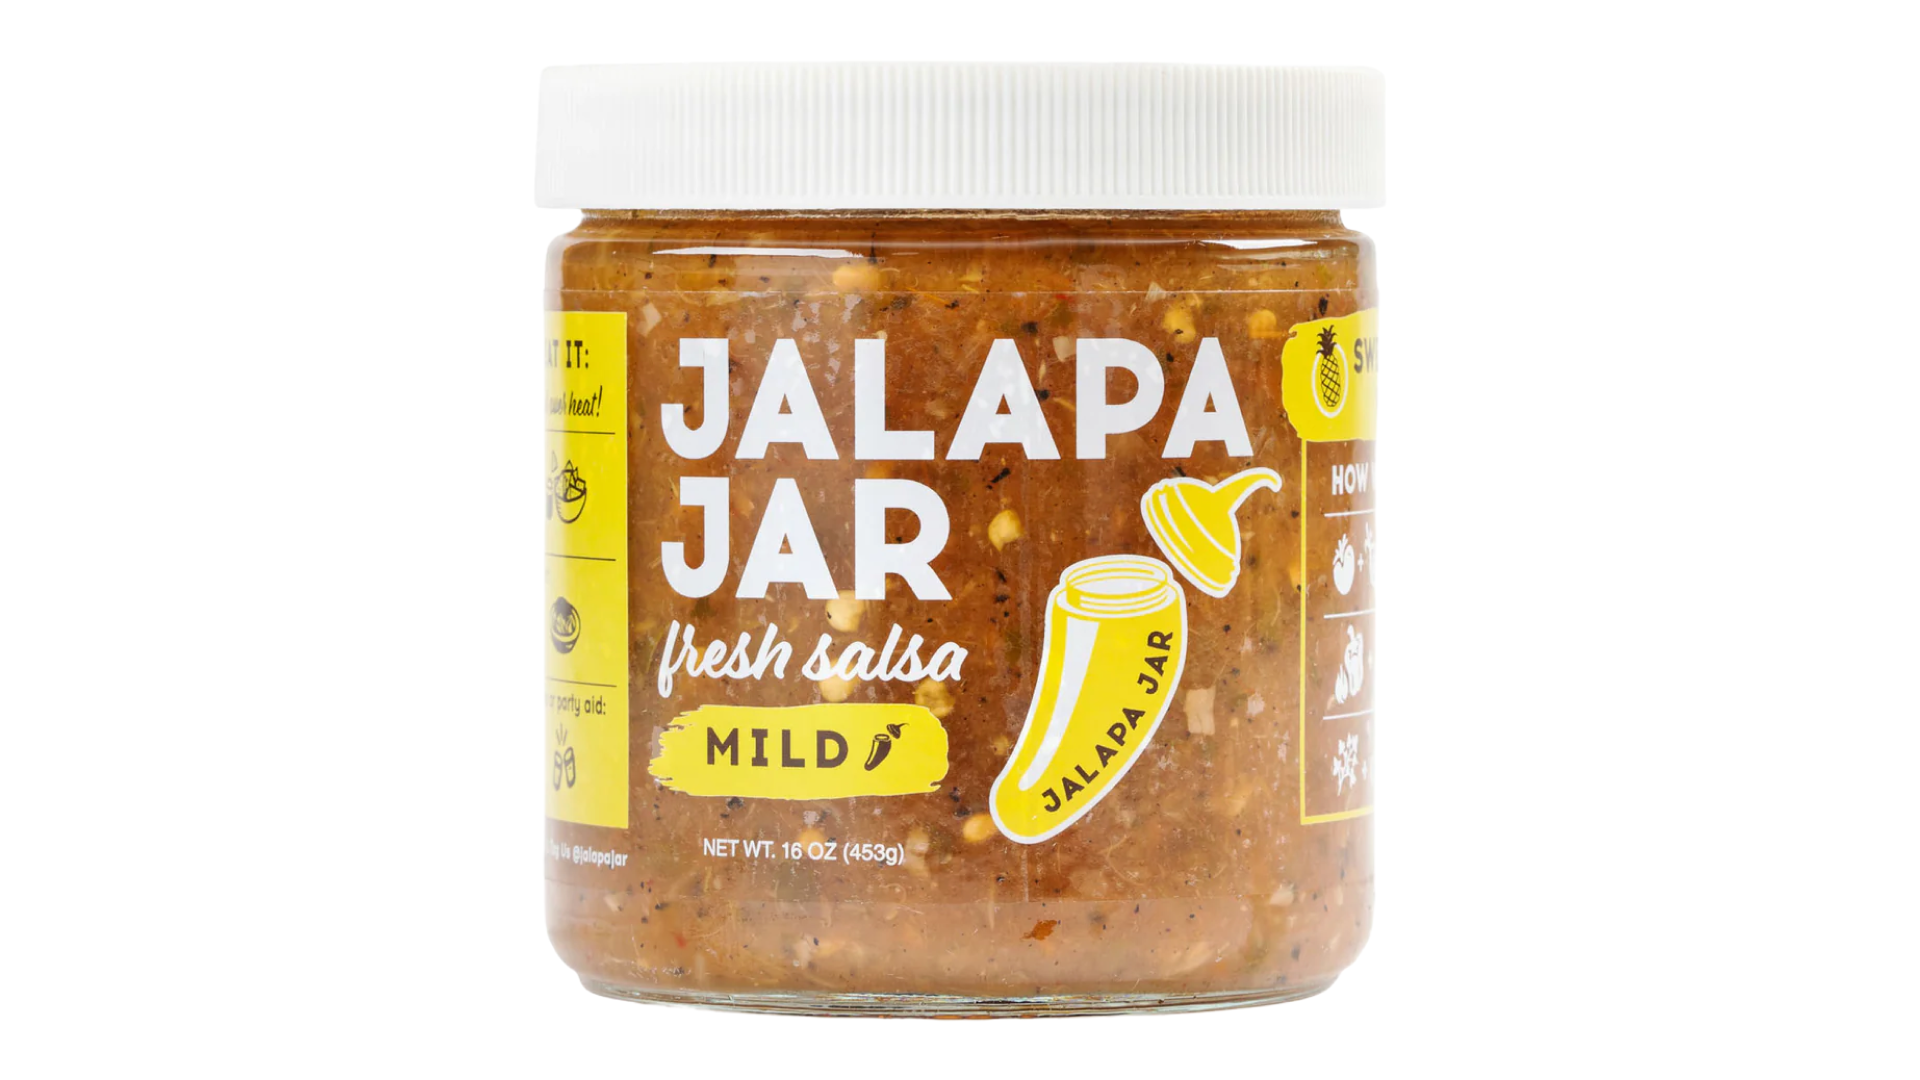 Jalapa Jar Mild Fresh Salsa Jar on white background